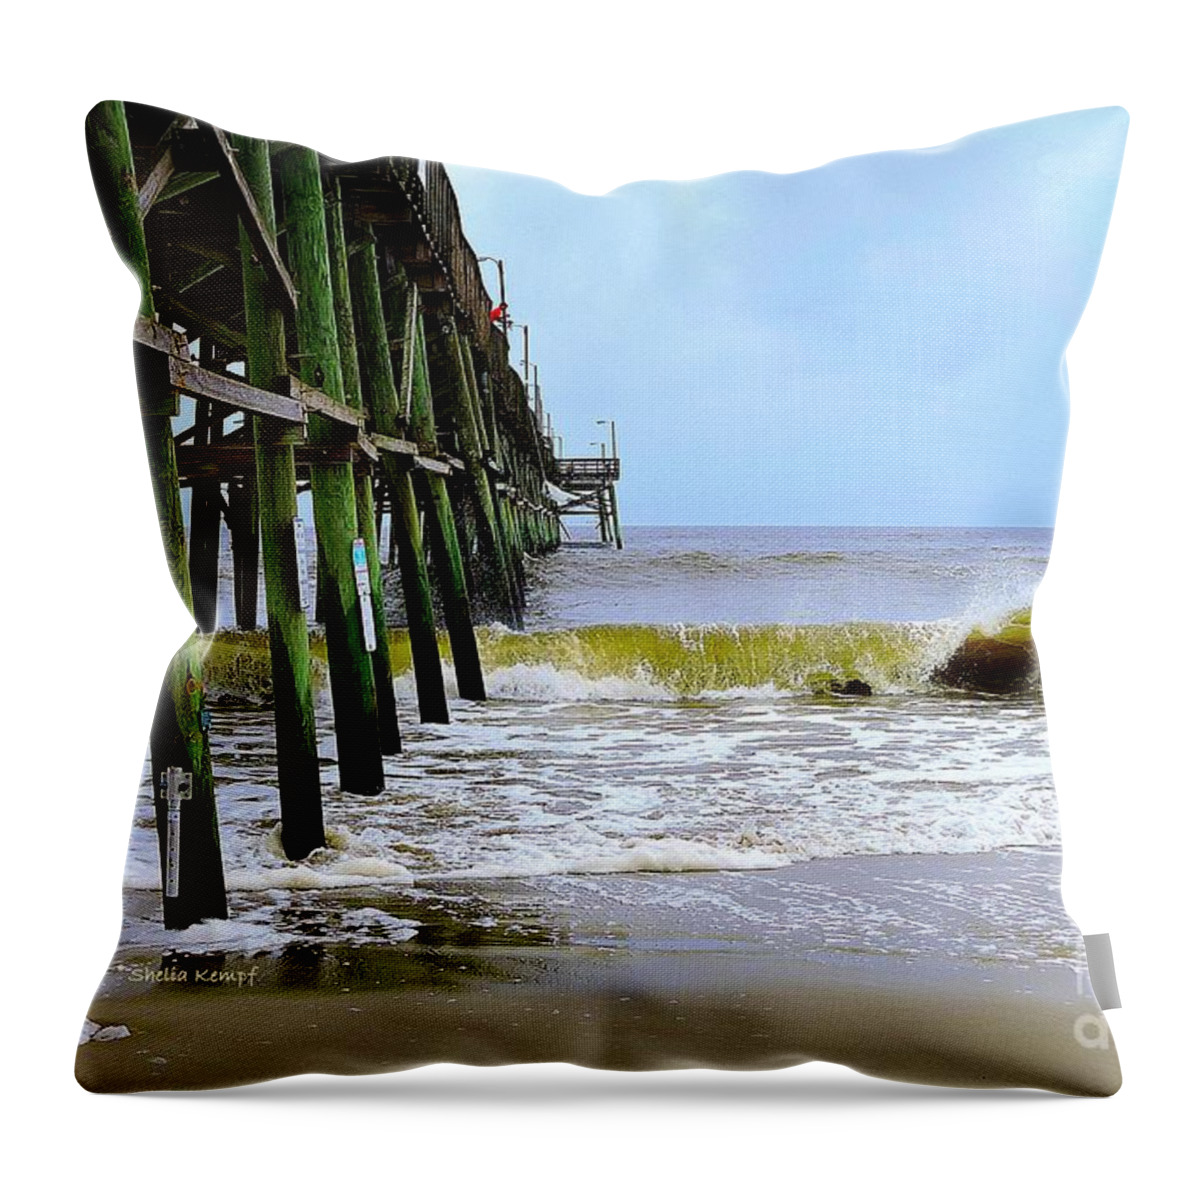 Art Throw Pillow featuring the photograph Oak Island Pier before H.Matthew by Shelia Kempf